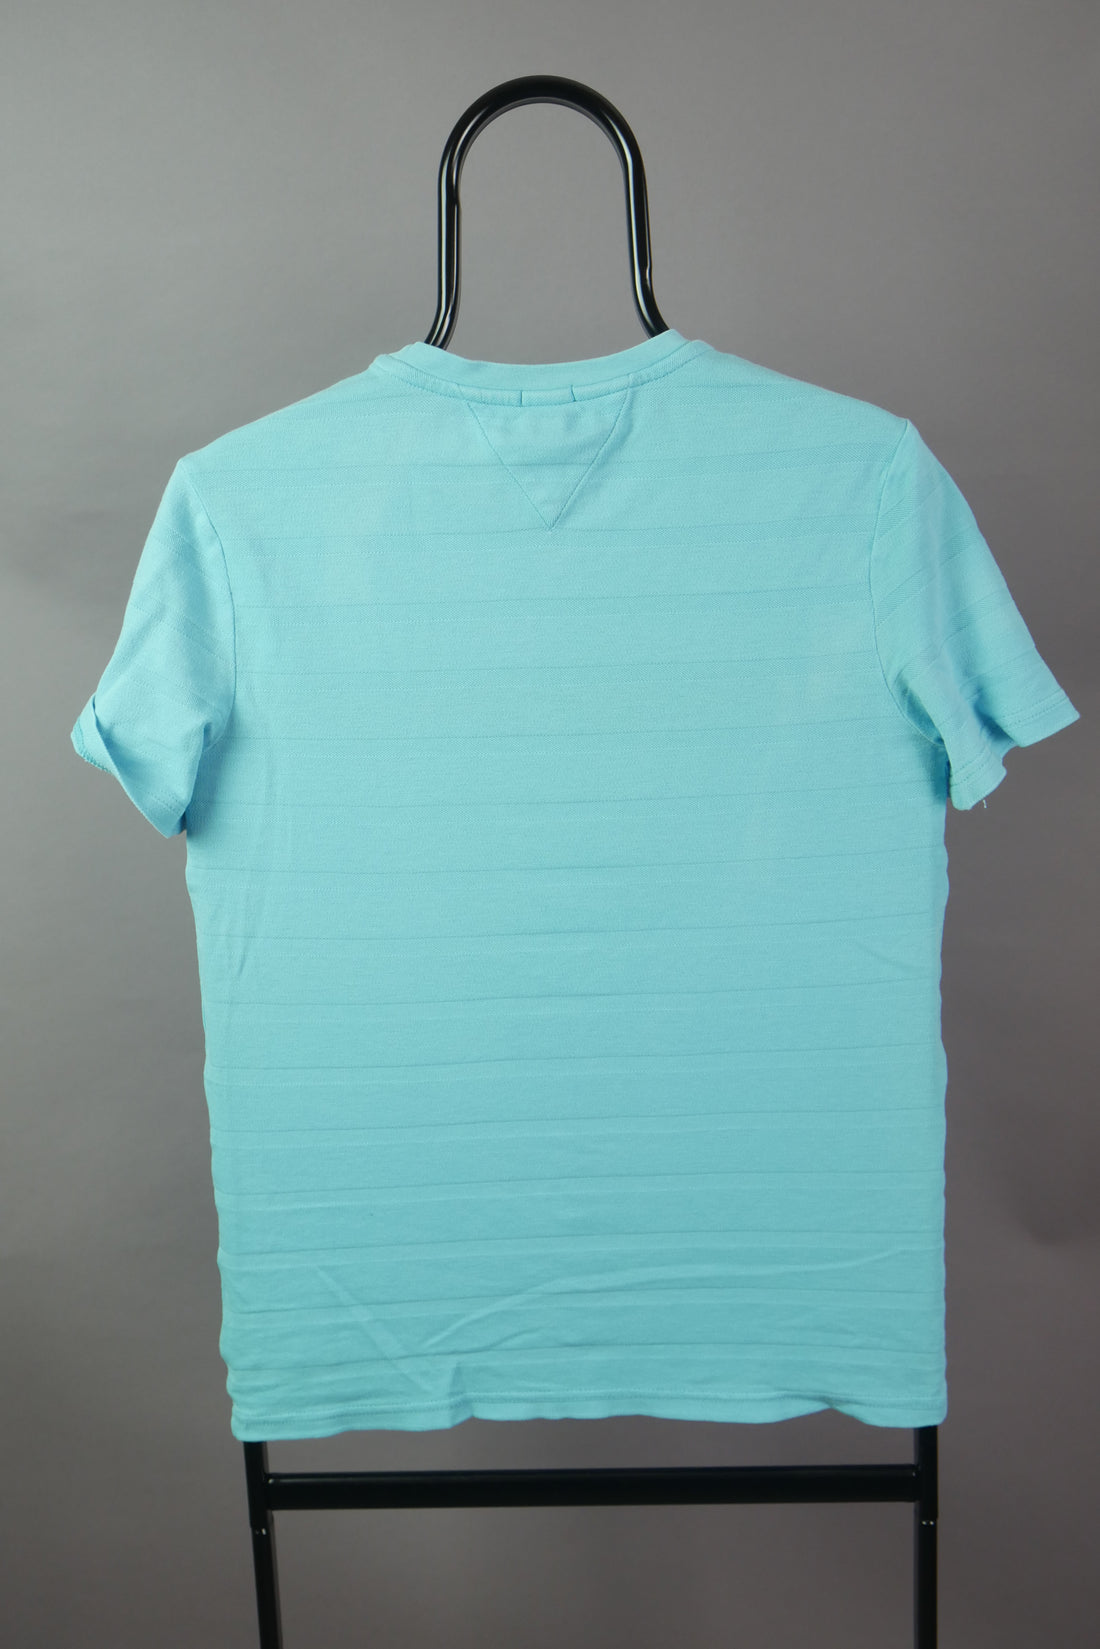 The Striped Tommy Hilfiger T-Shirt (XS)